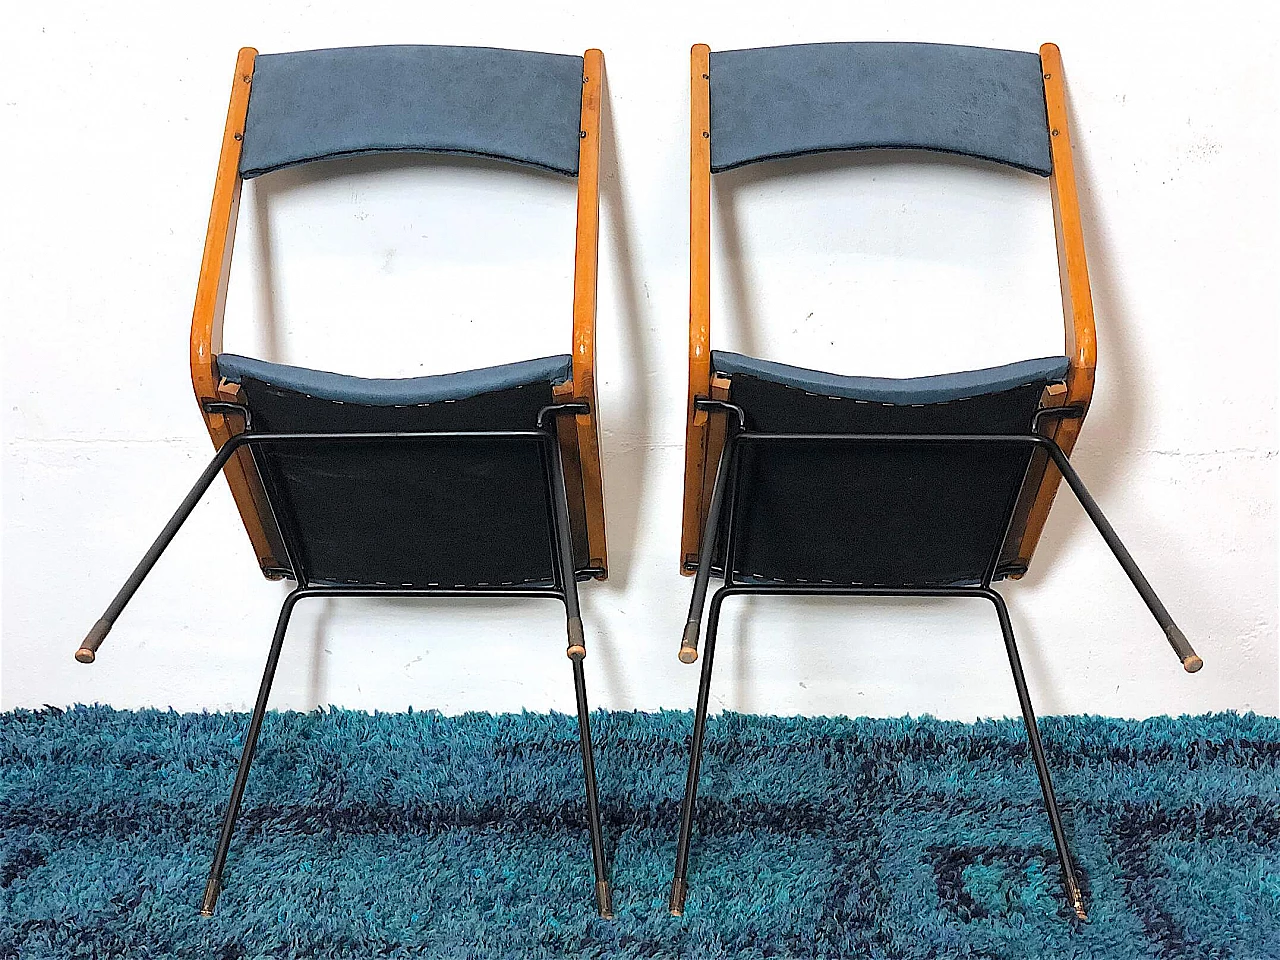 Pair of Boomerang chairs by Carlo De Carli, 1950s 1481115